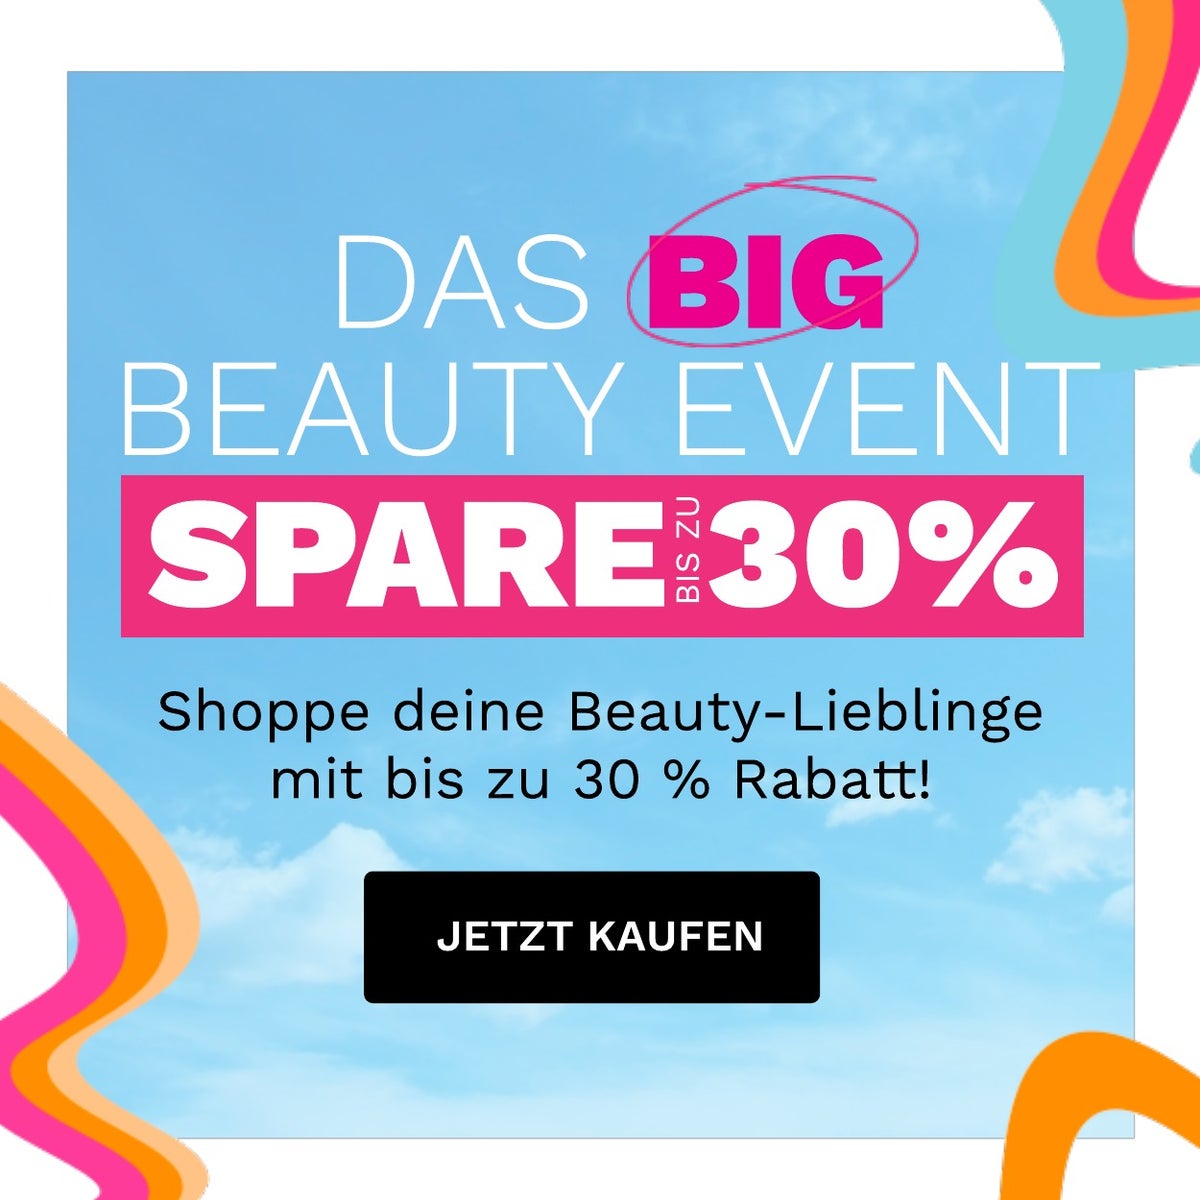 Das Big Beauty Event - spare bis zu 30 %!